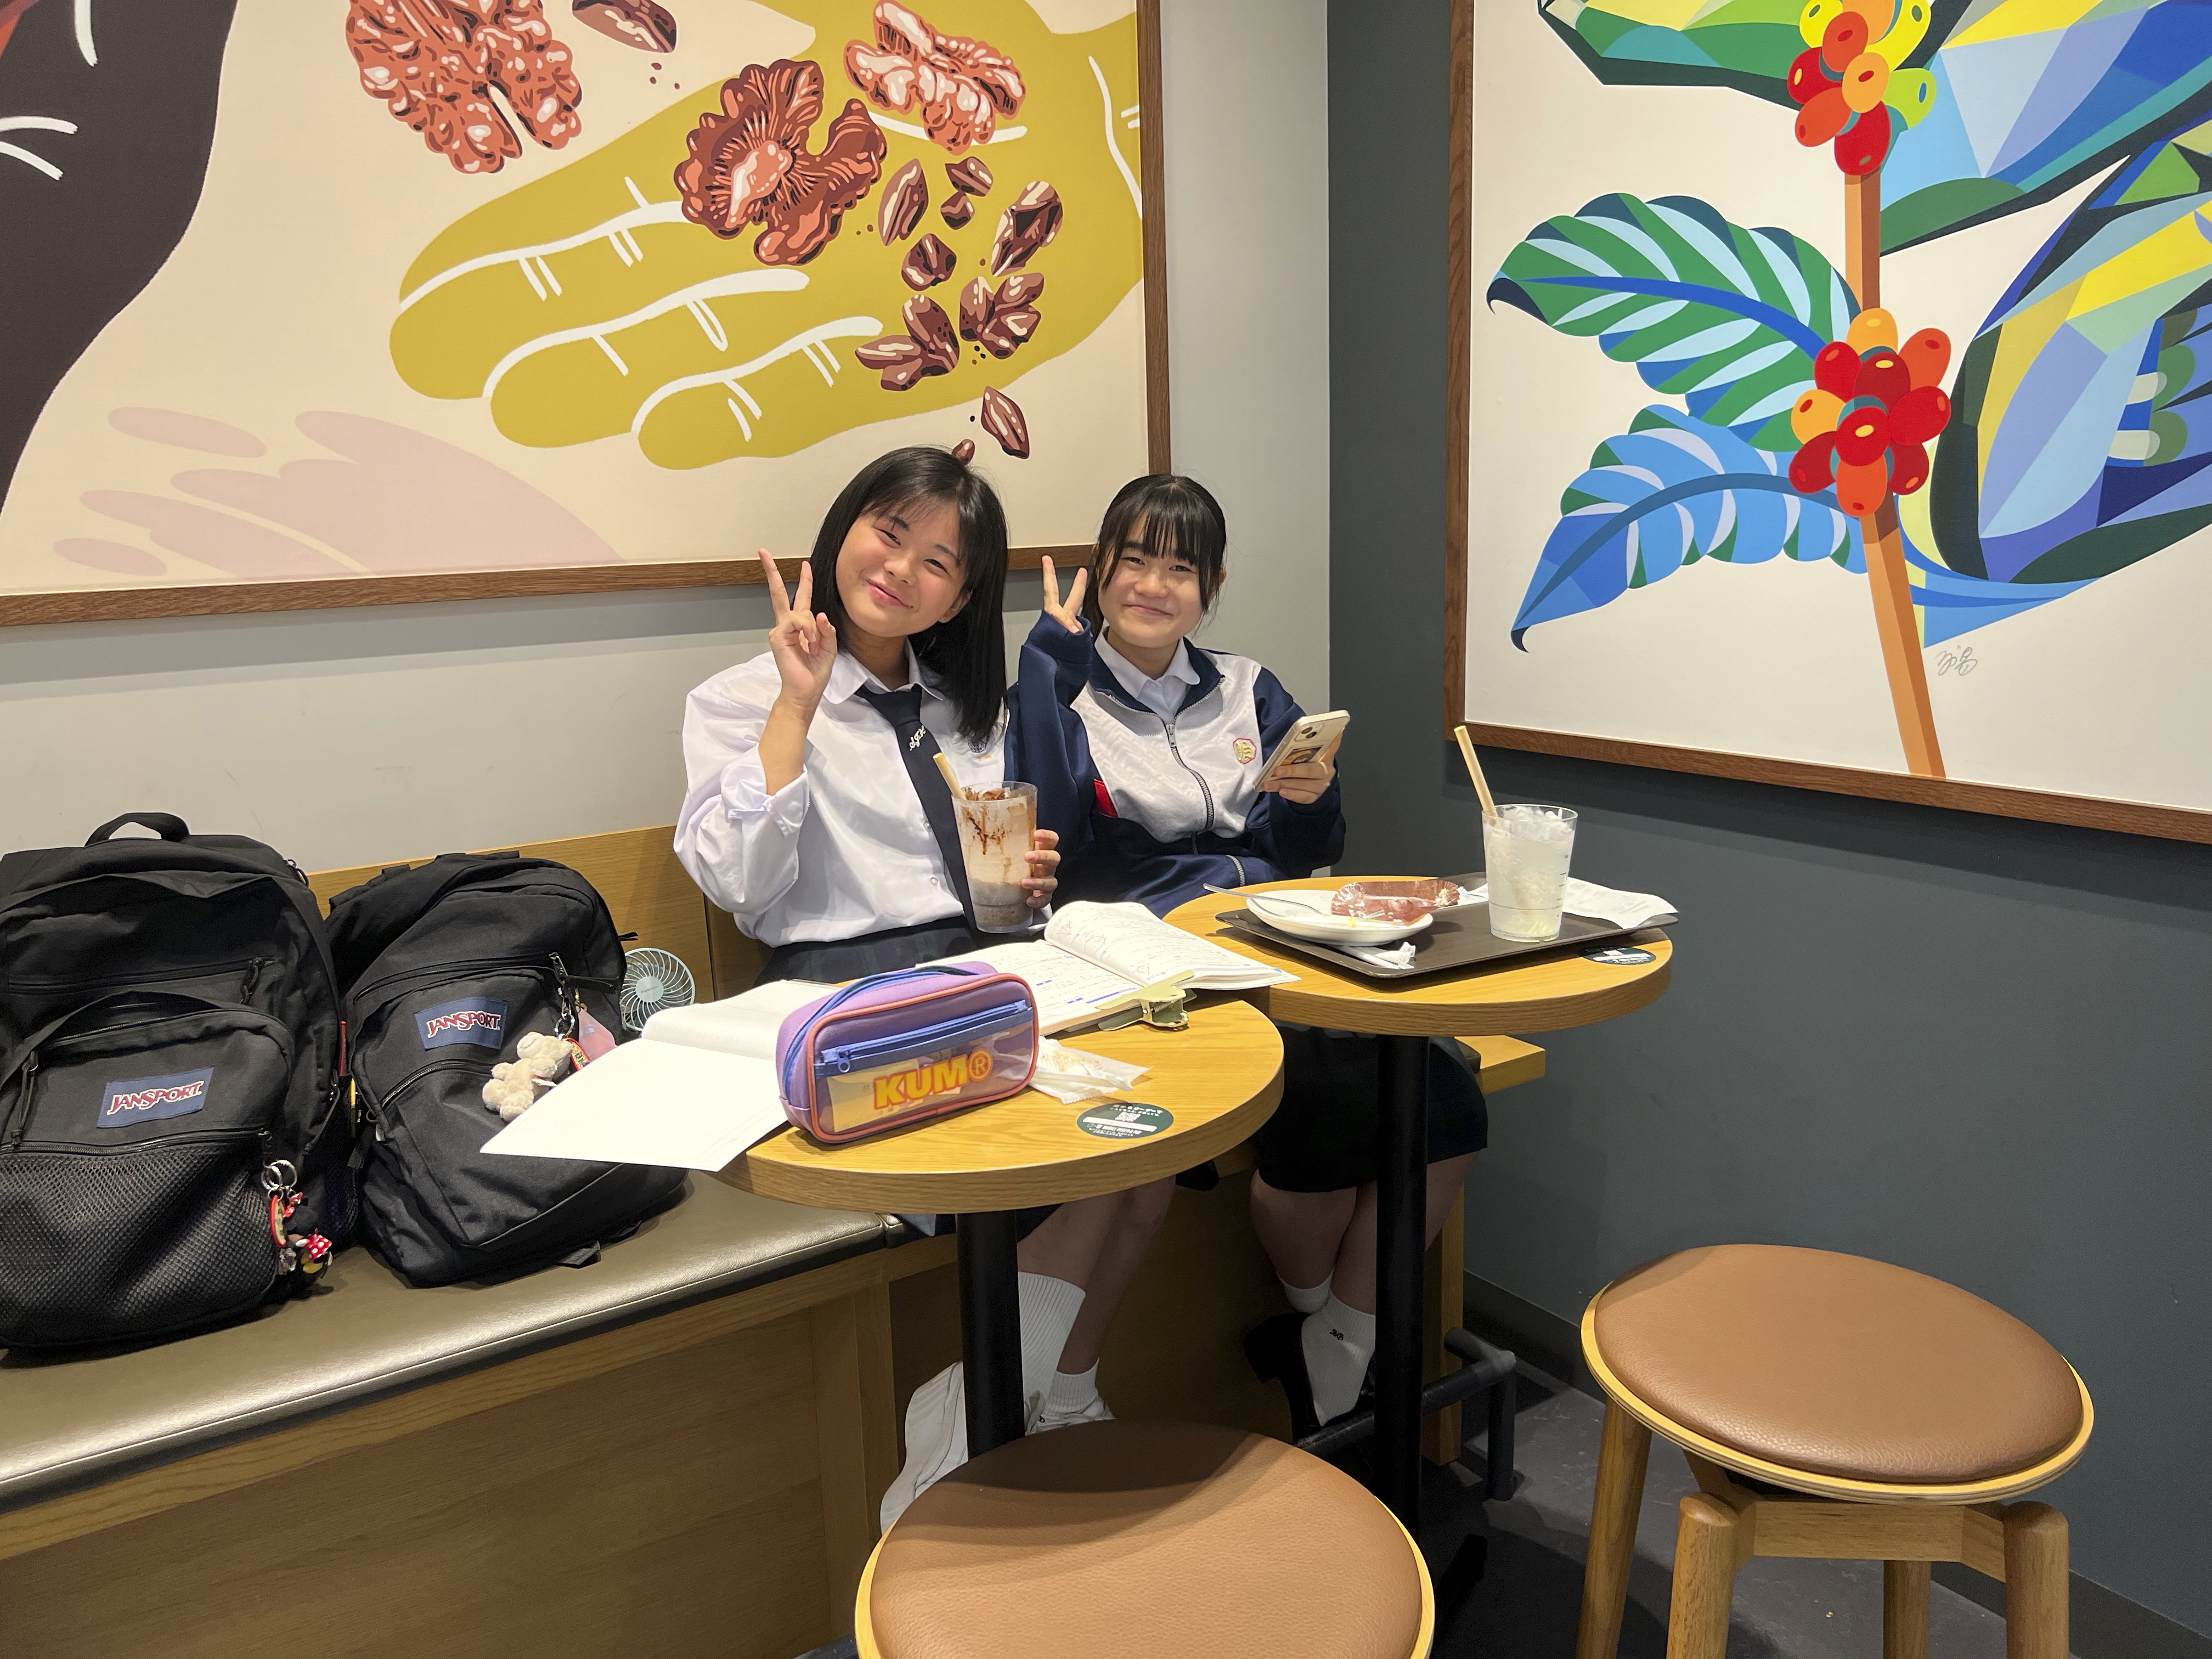 Homework in the café, Japan